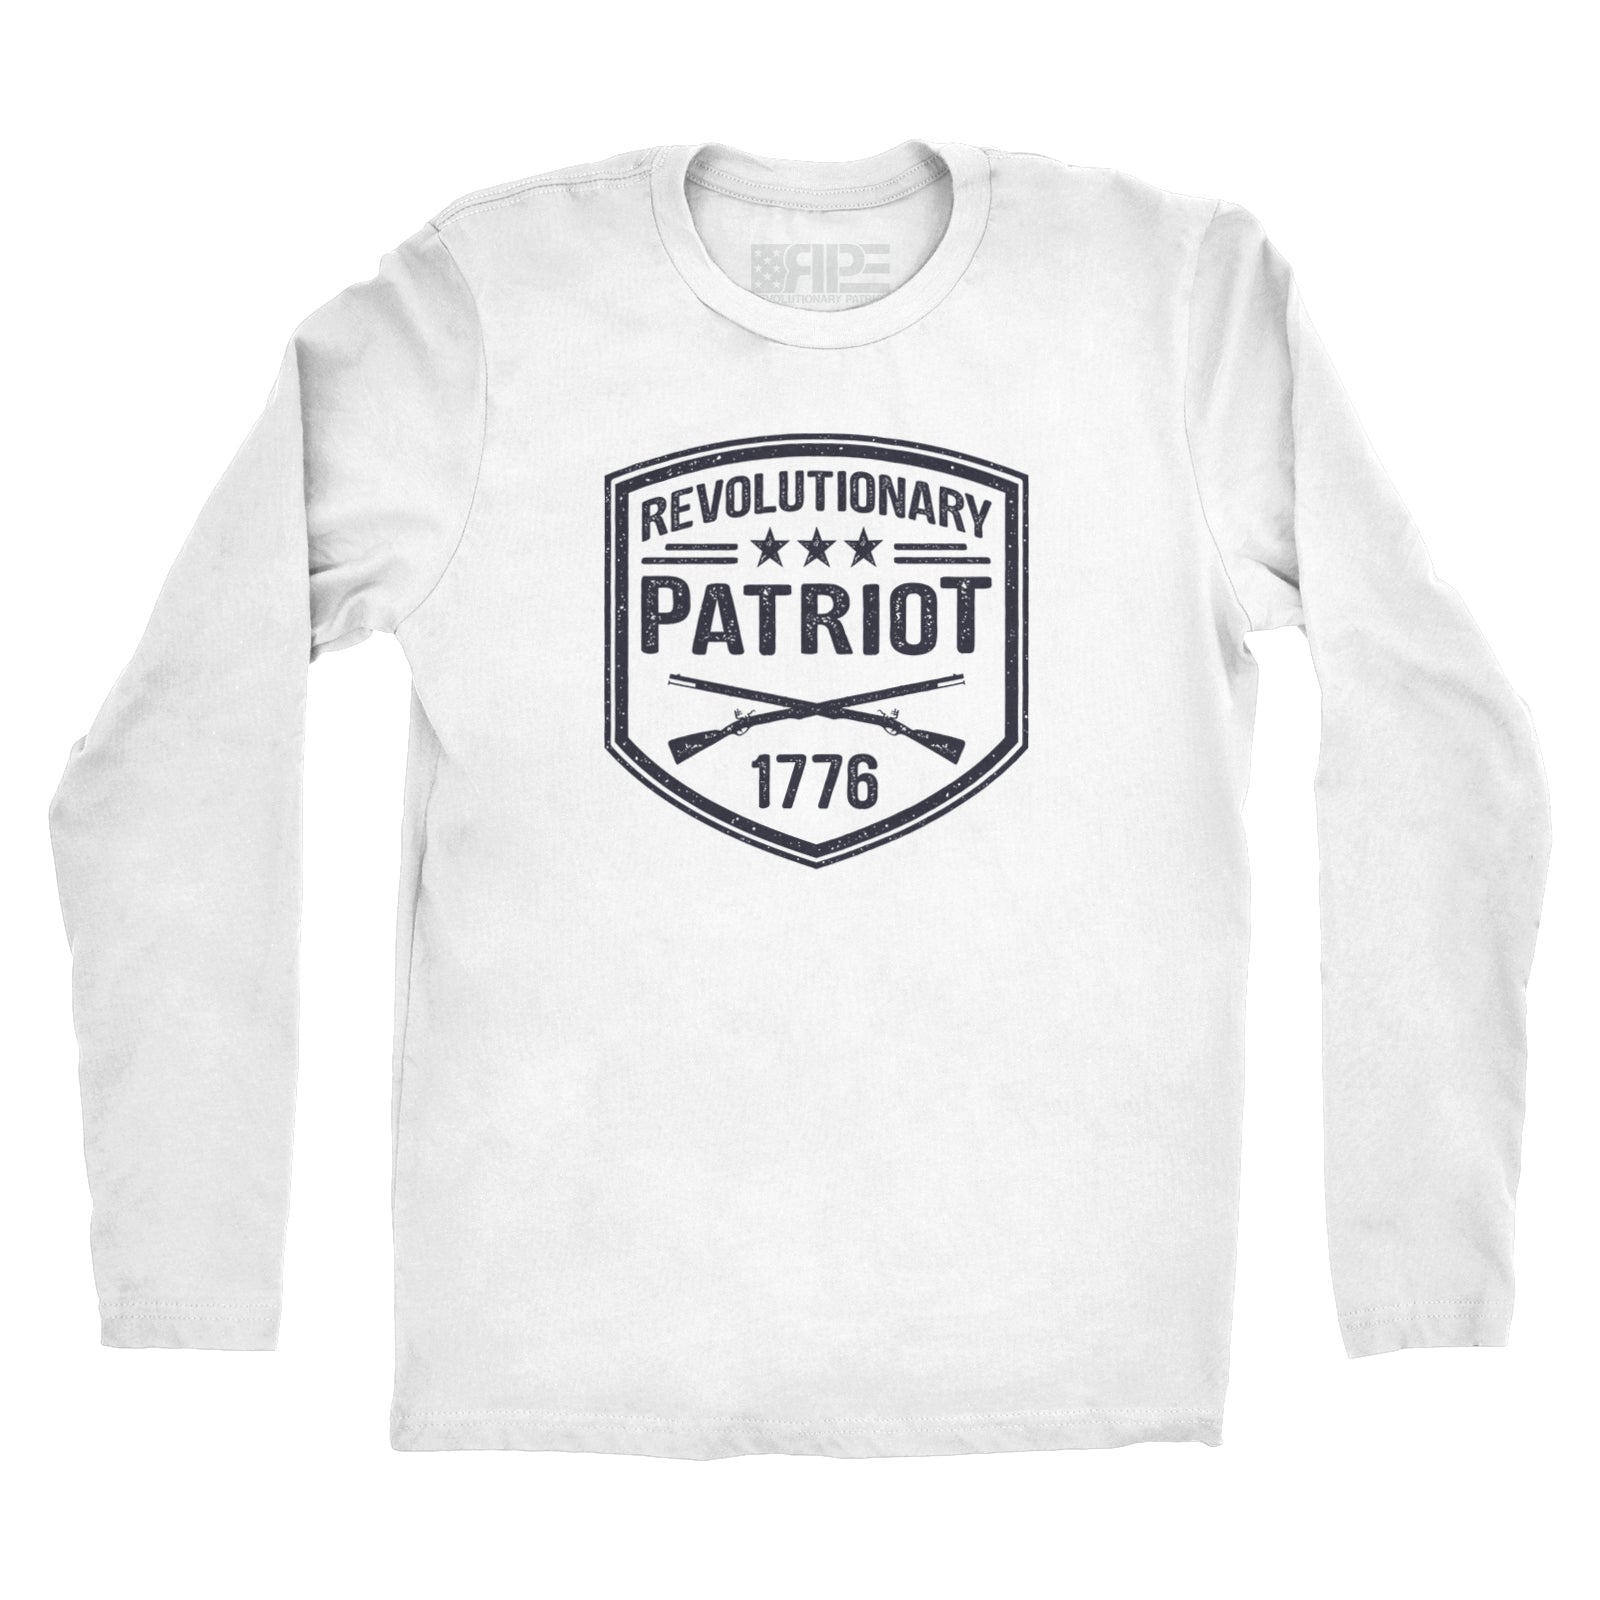 Revolutionary Patriot Long Sleeve (White) - Revolutionary Patriot